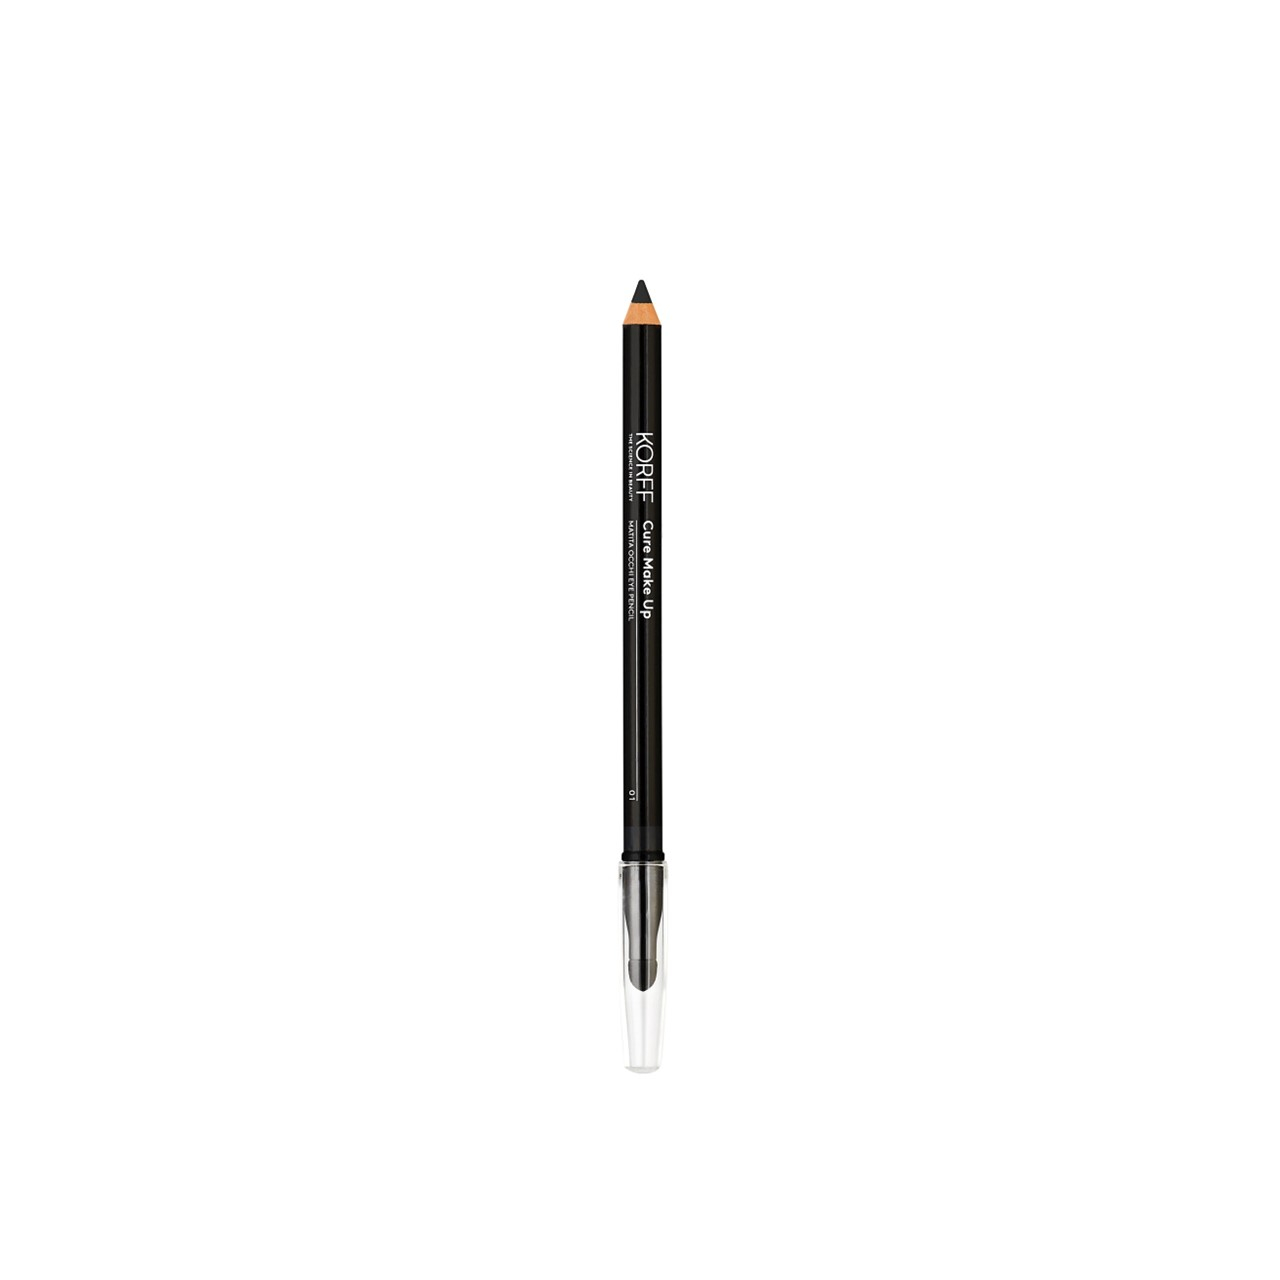 Korff Cure Make-Up Eye Pencil 01 1.1g